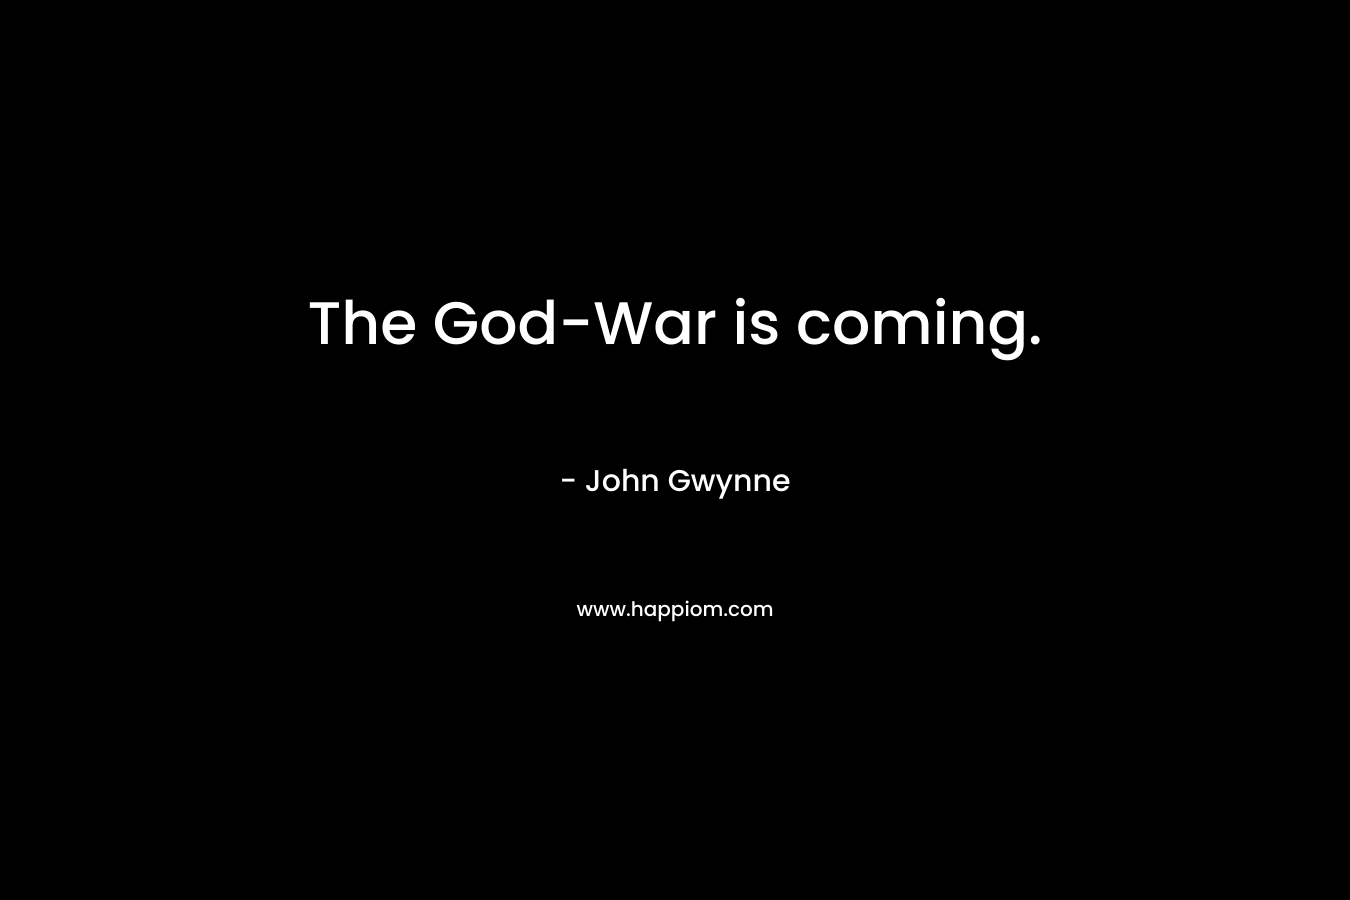 The God-War is coming. – John Gwynne